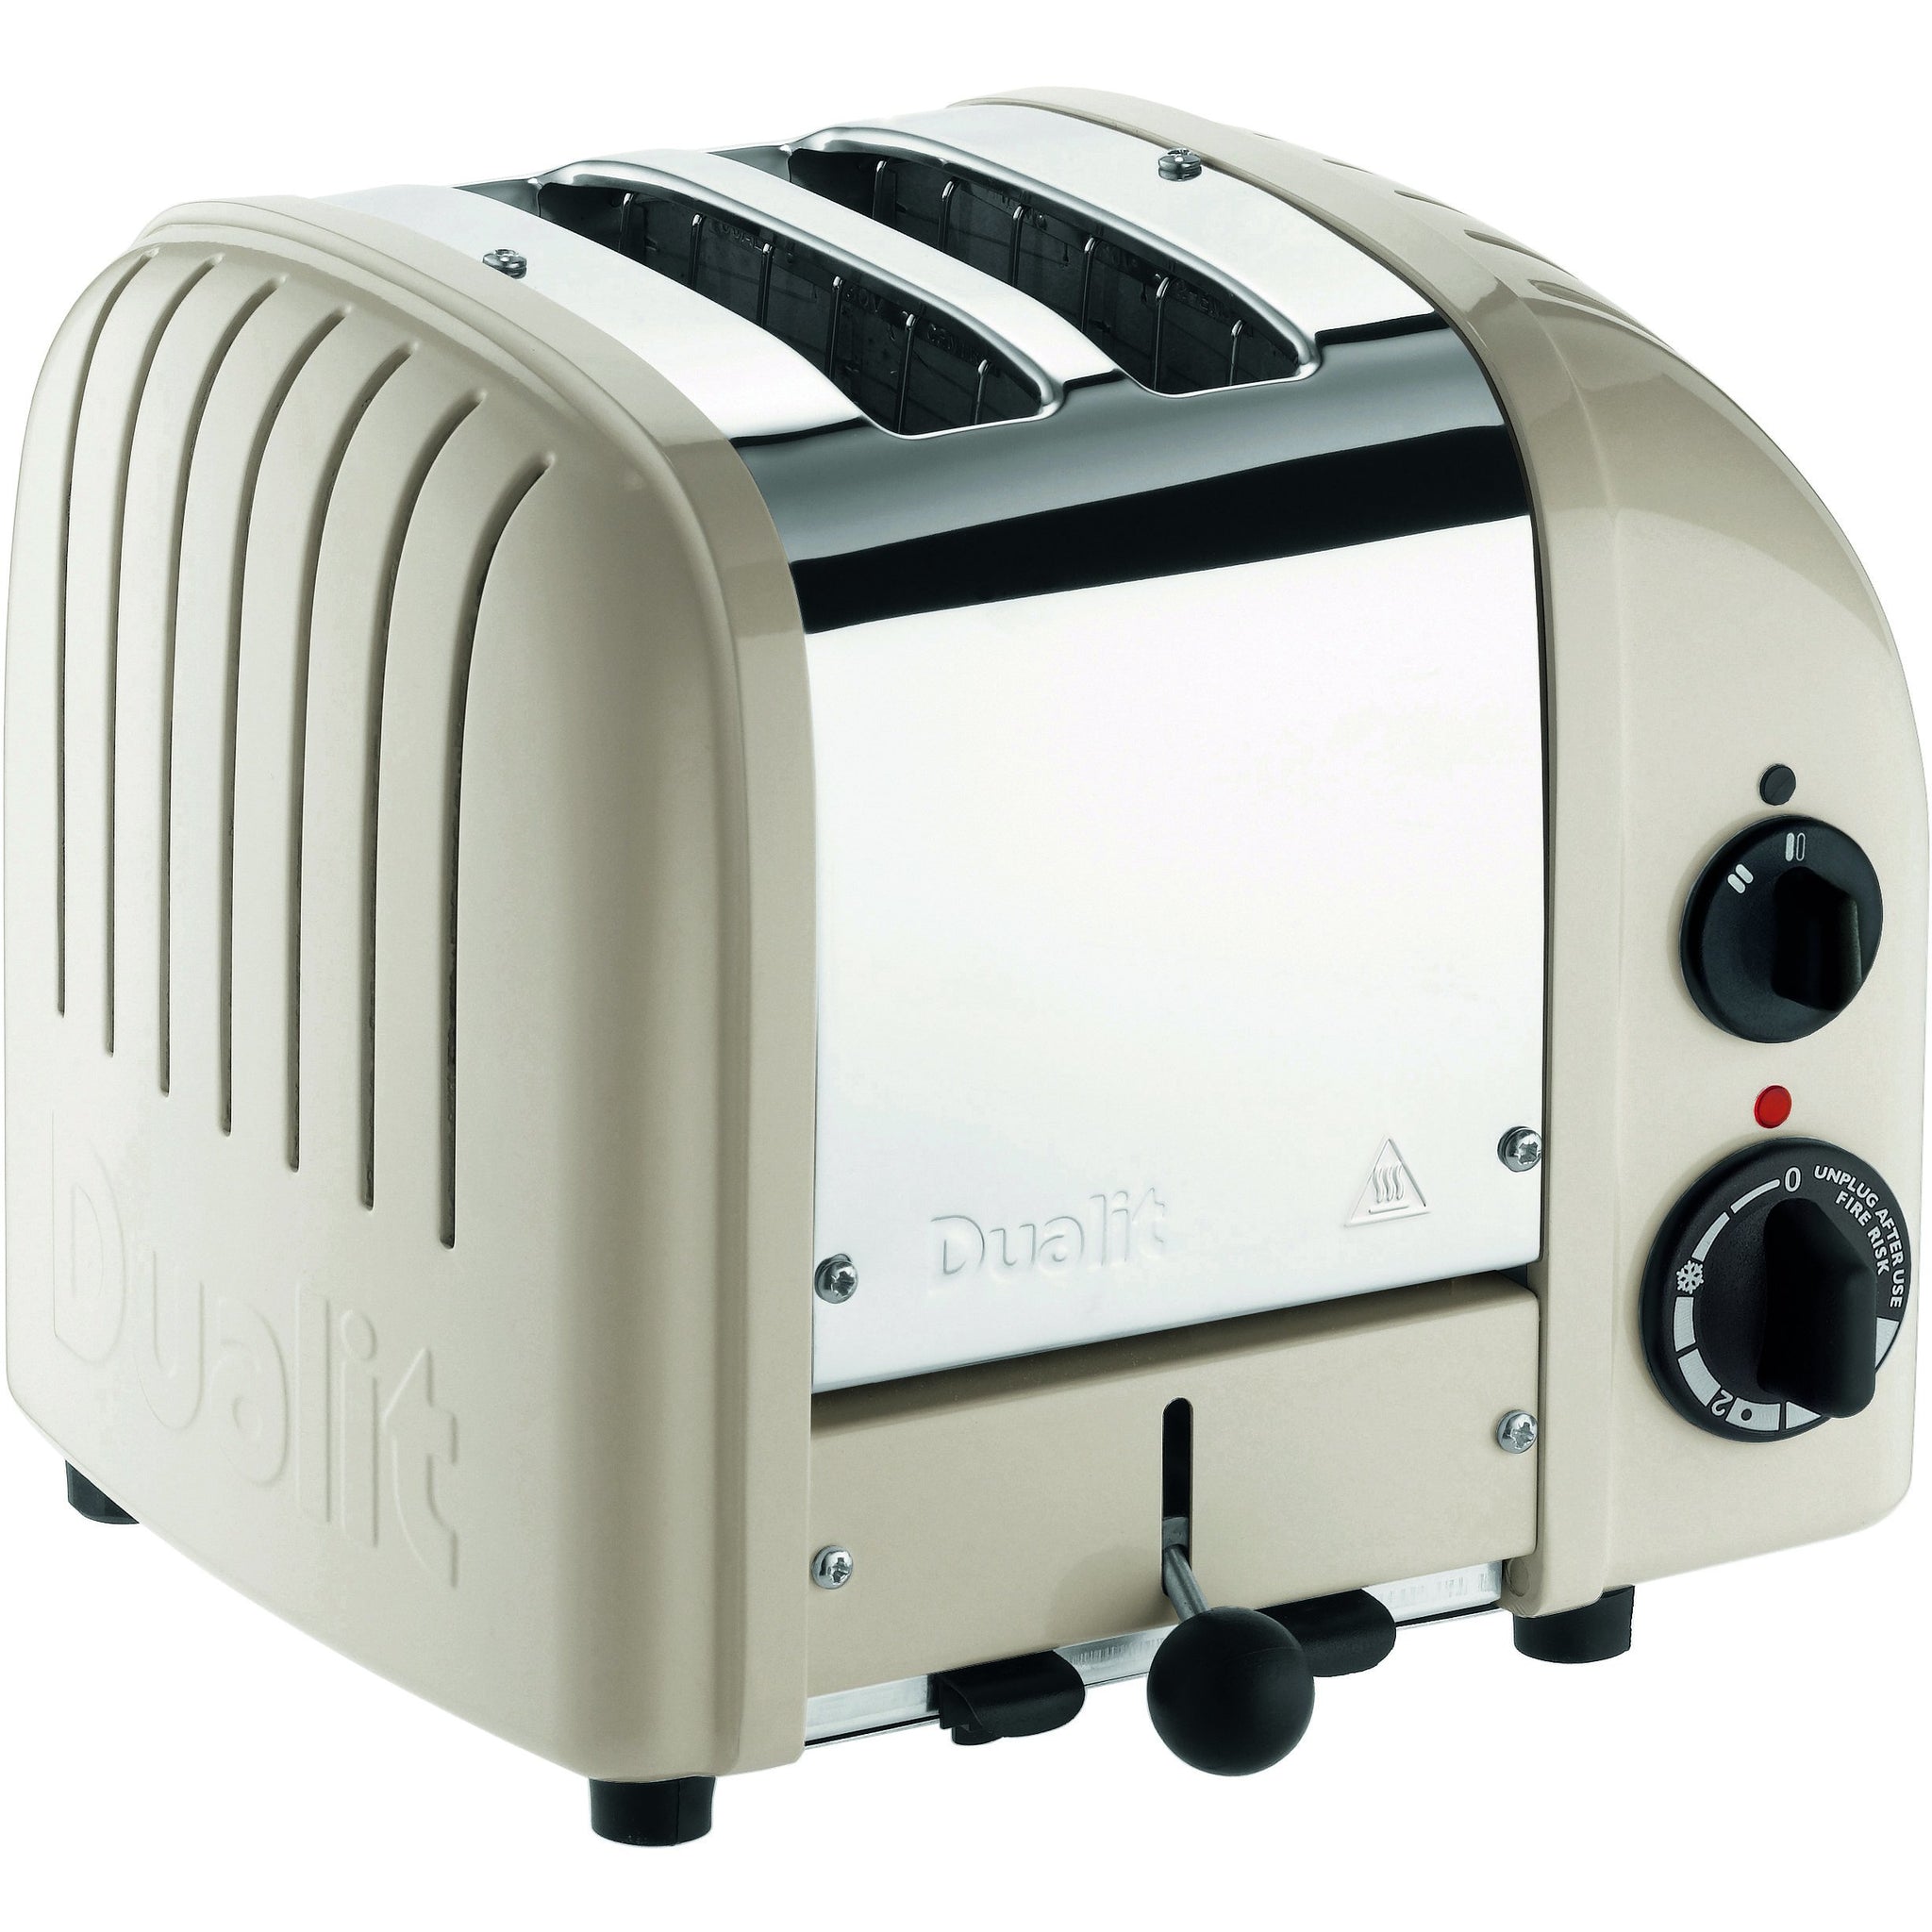 KitchenAid Artisan 2-Slot Toaster | Harrods MD